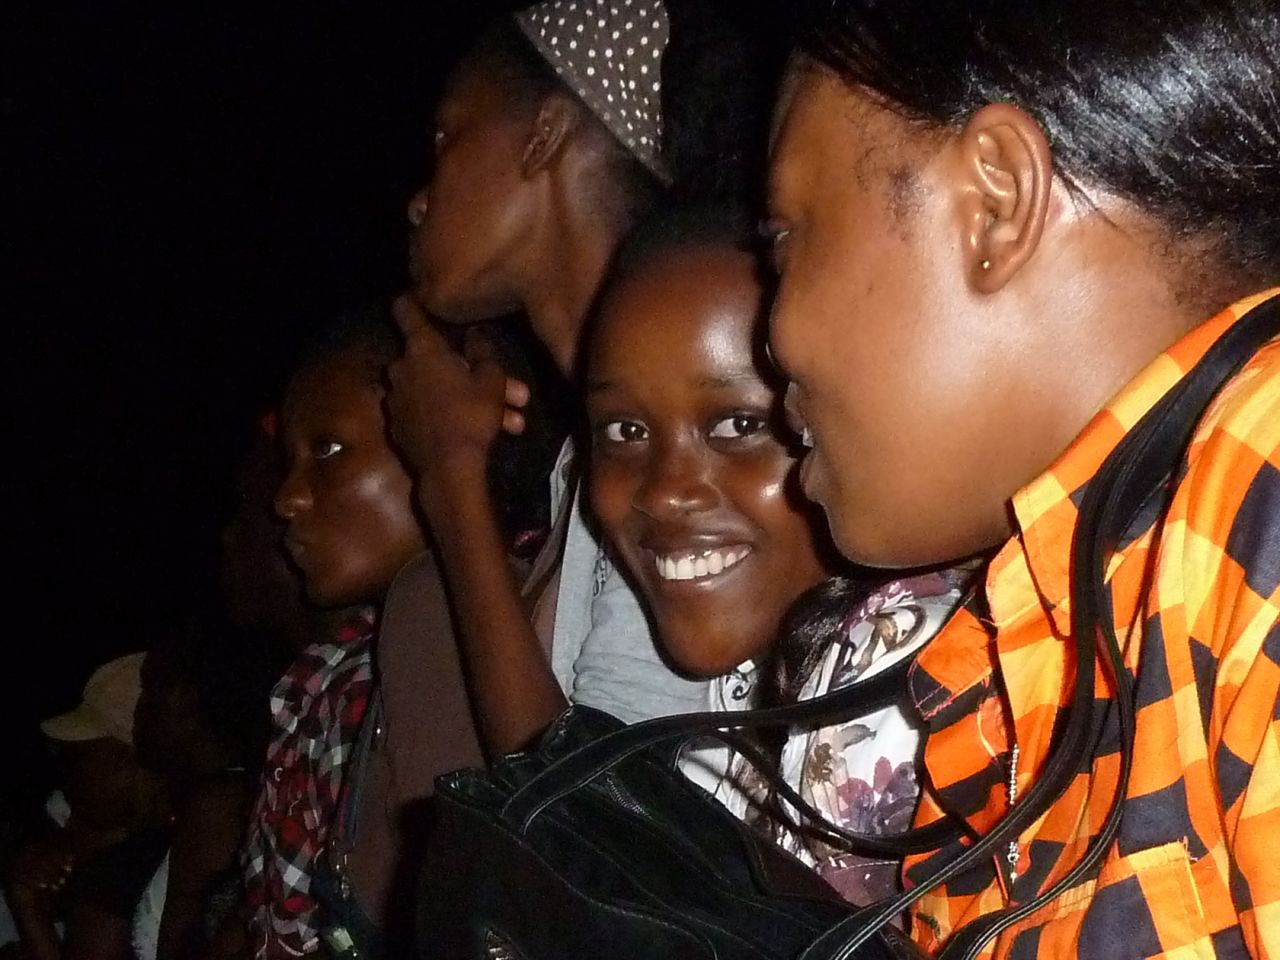 A young Gabonese girl smiles to the camera during a hip hop concert.